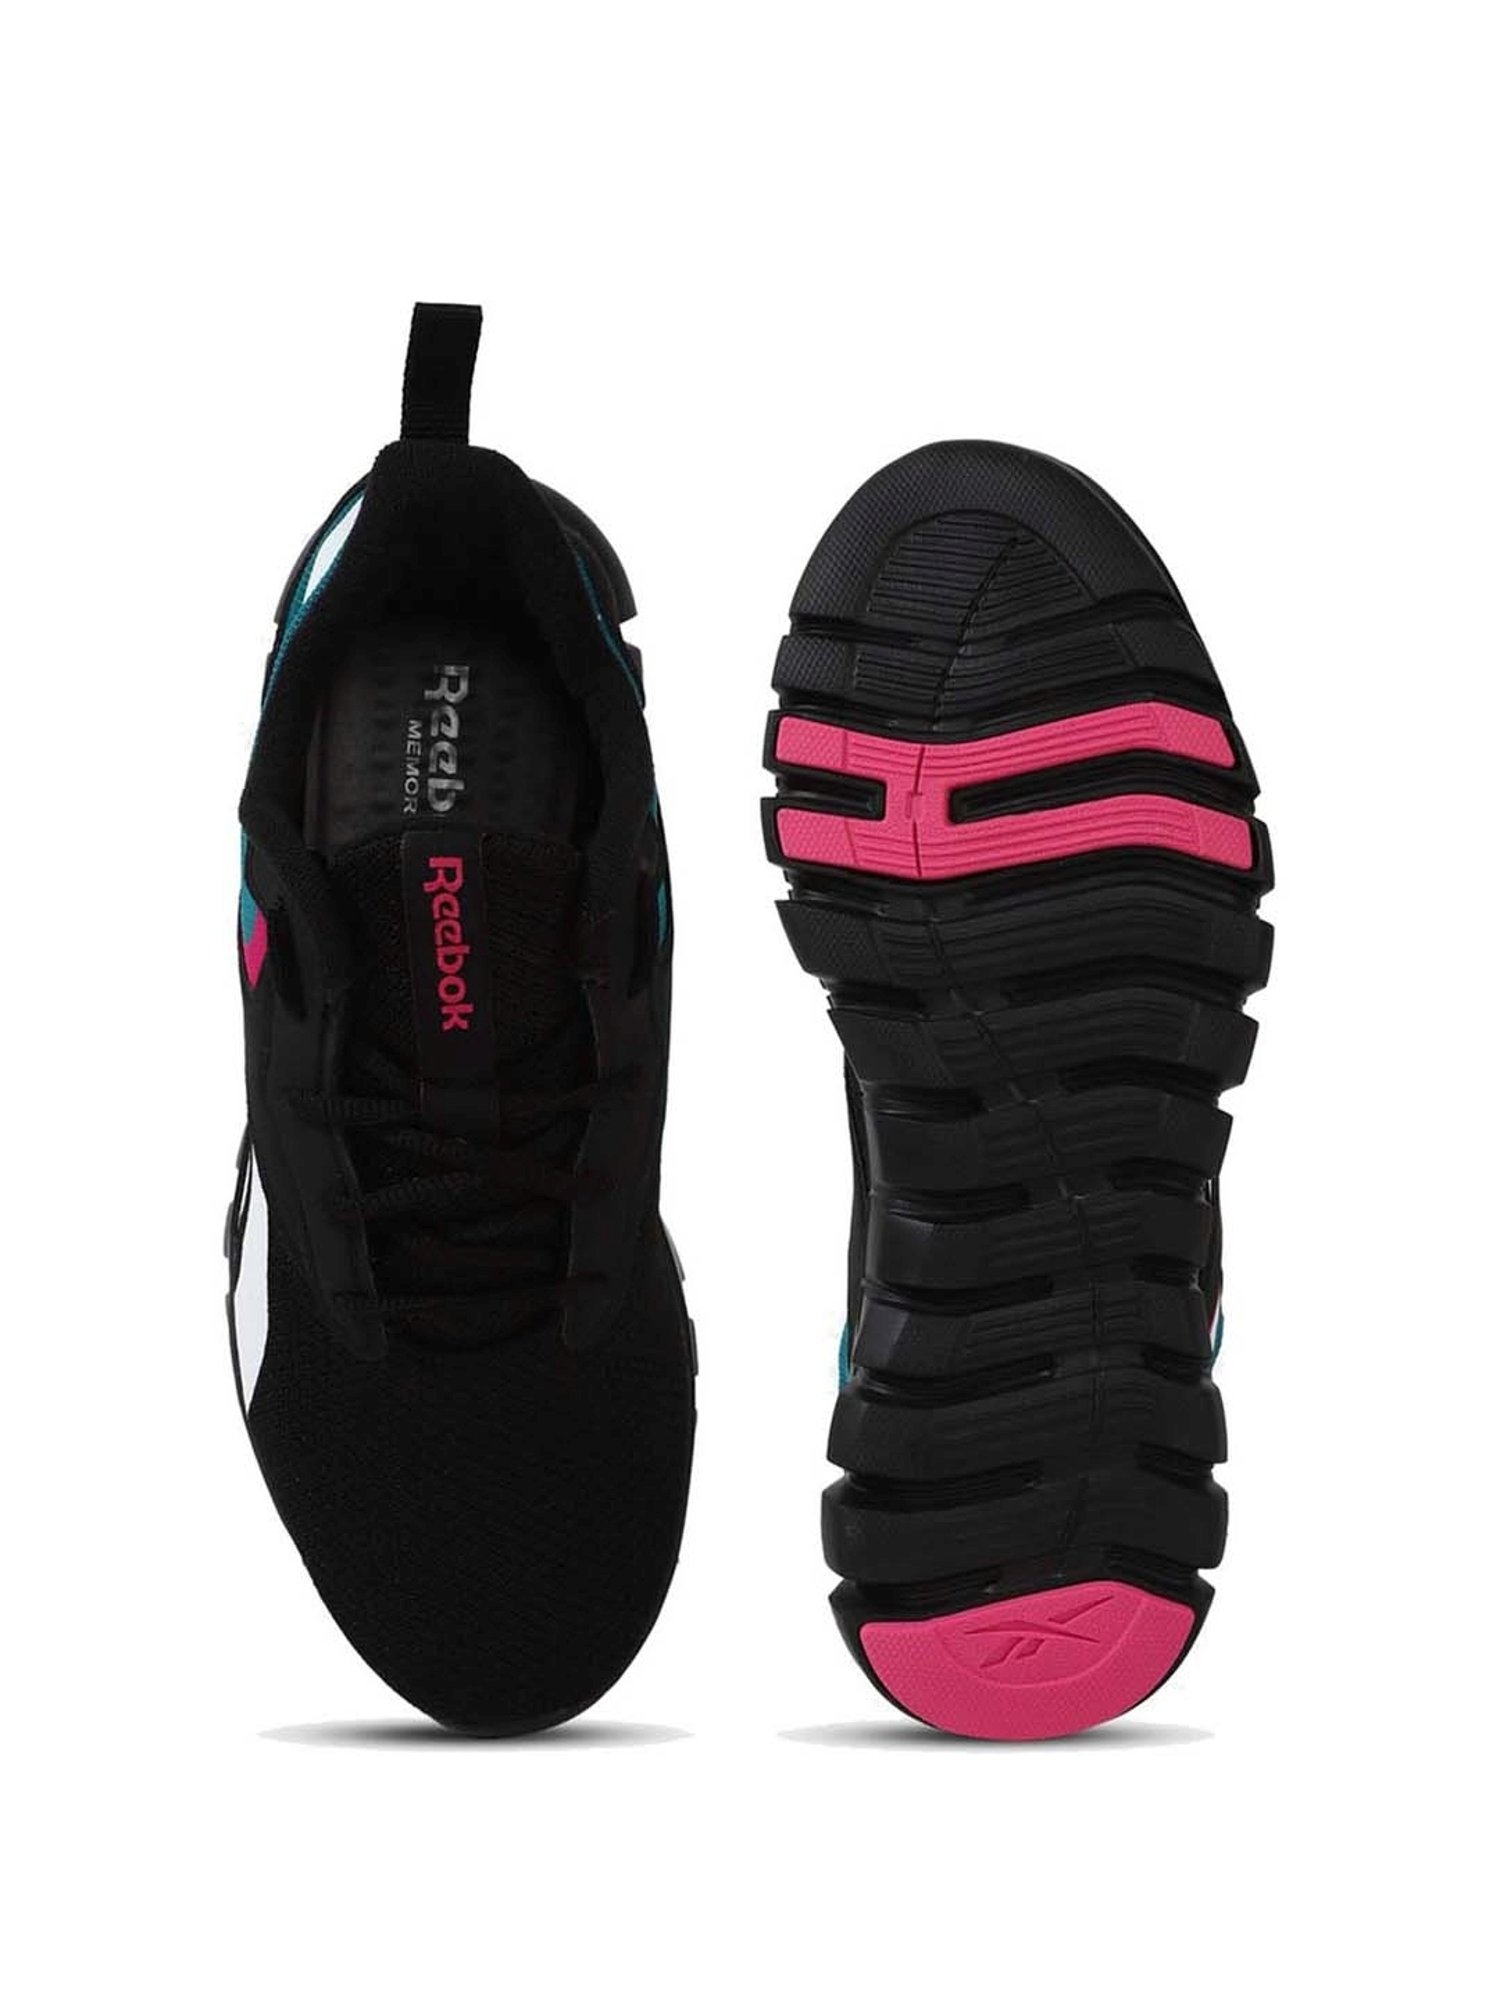 Rare Nike Shox Turbo Black Pink Running Shoes 454165-006 Womens Size 9 |  eBay